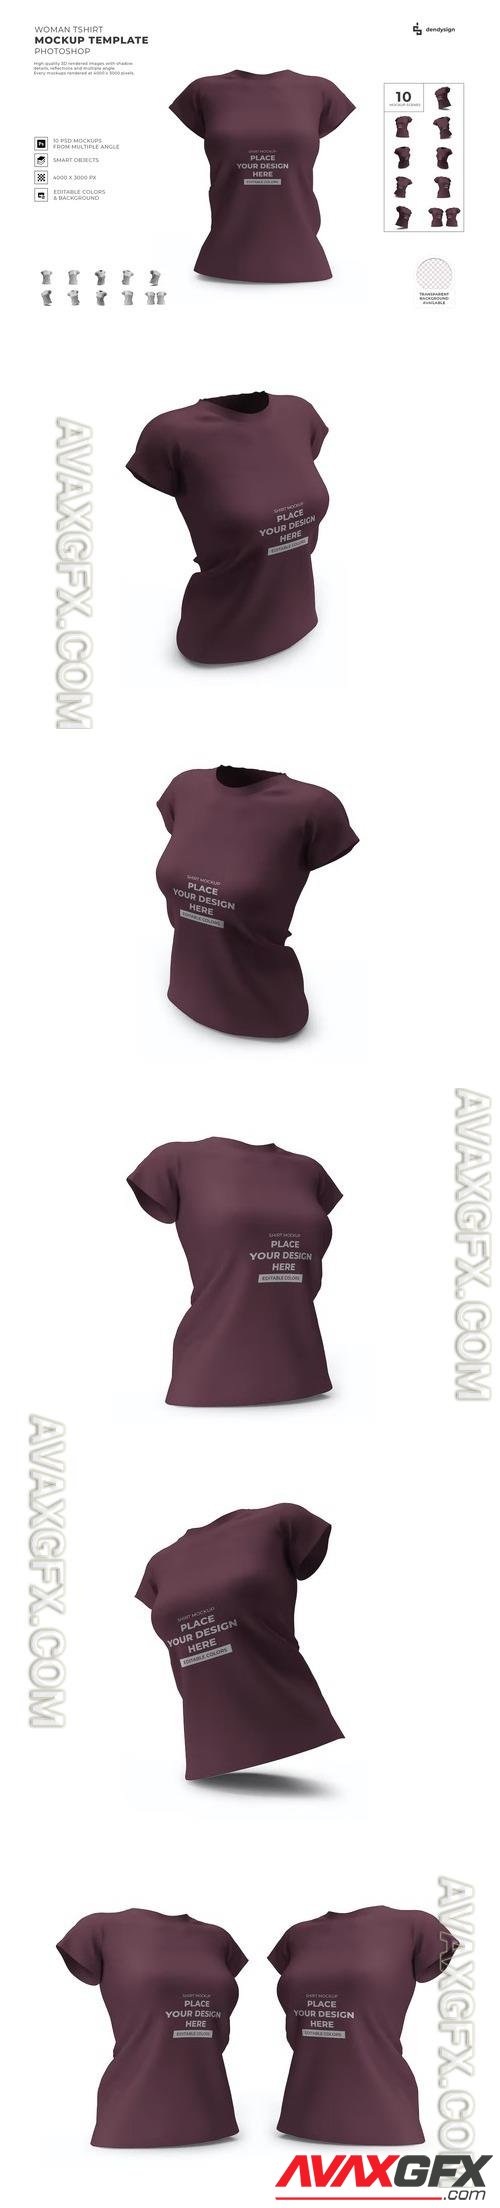 Woman Shirt Mockup Template Set